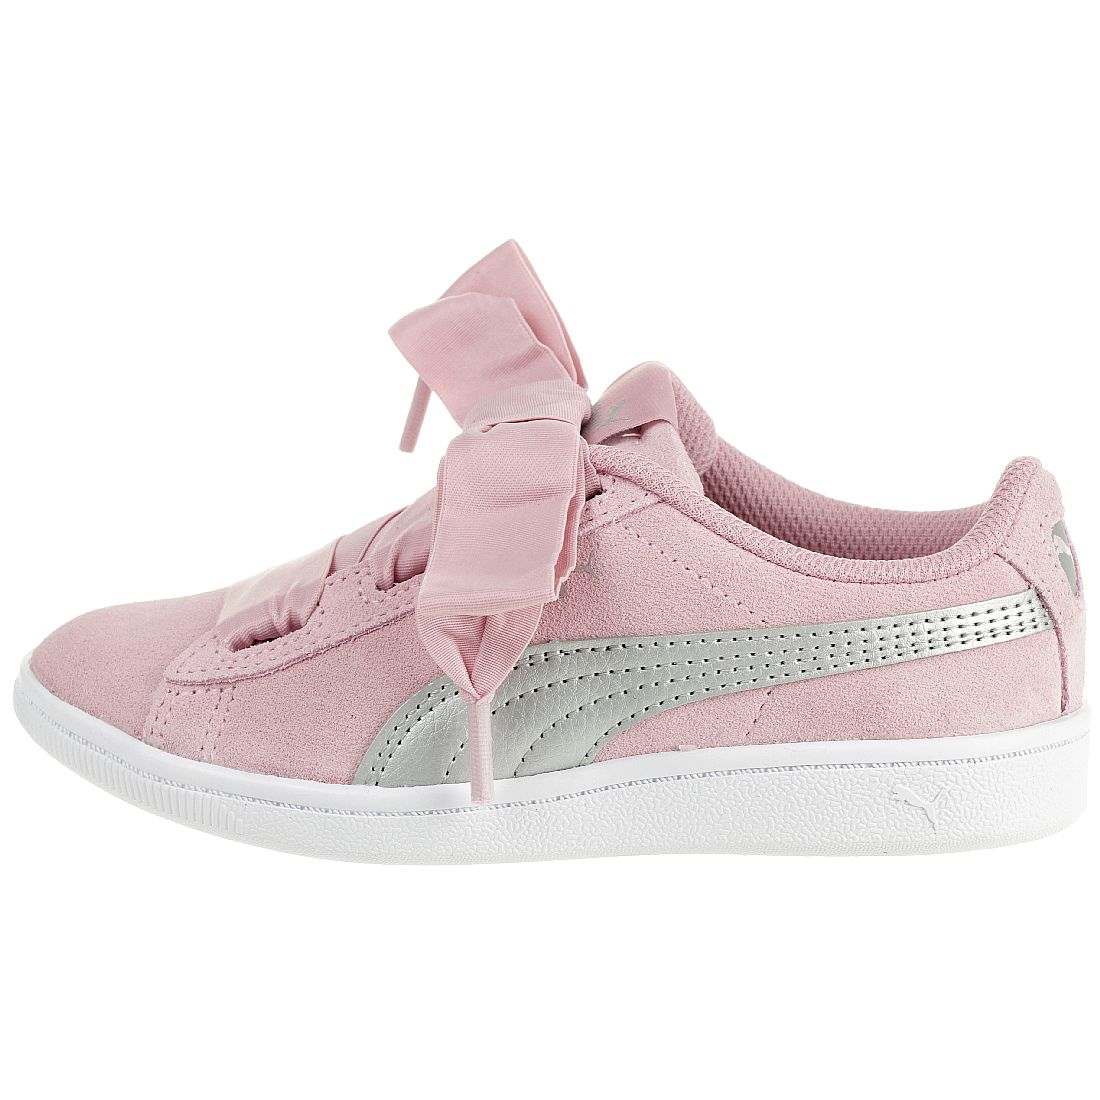 Puma Vikky Ribbon AC PS Sneaker Kinder Mädchen Schuhe Leder 367640 05 Pink